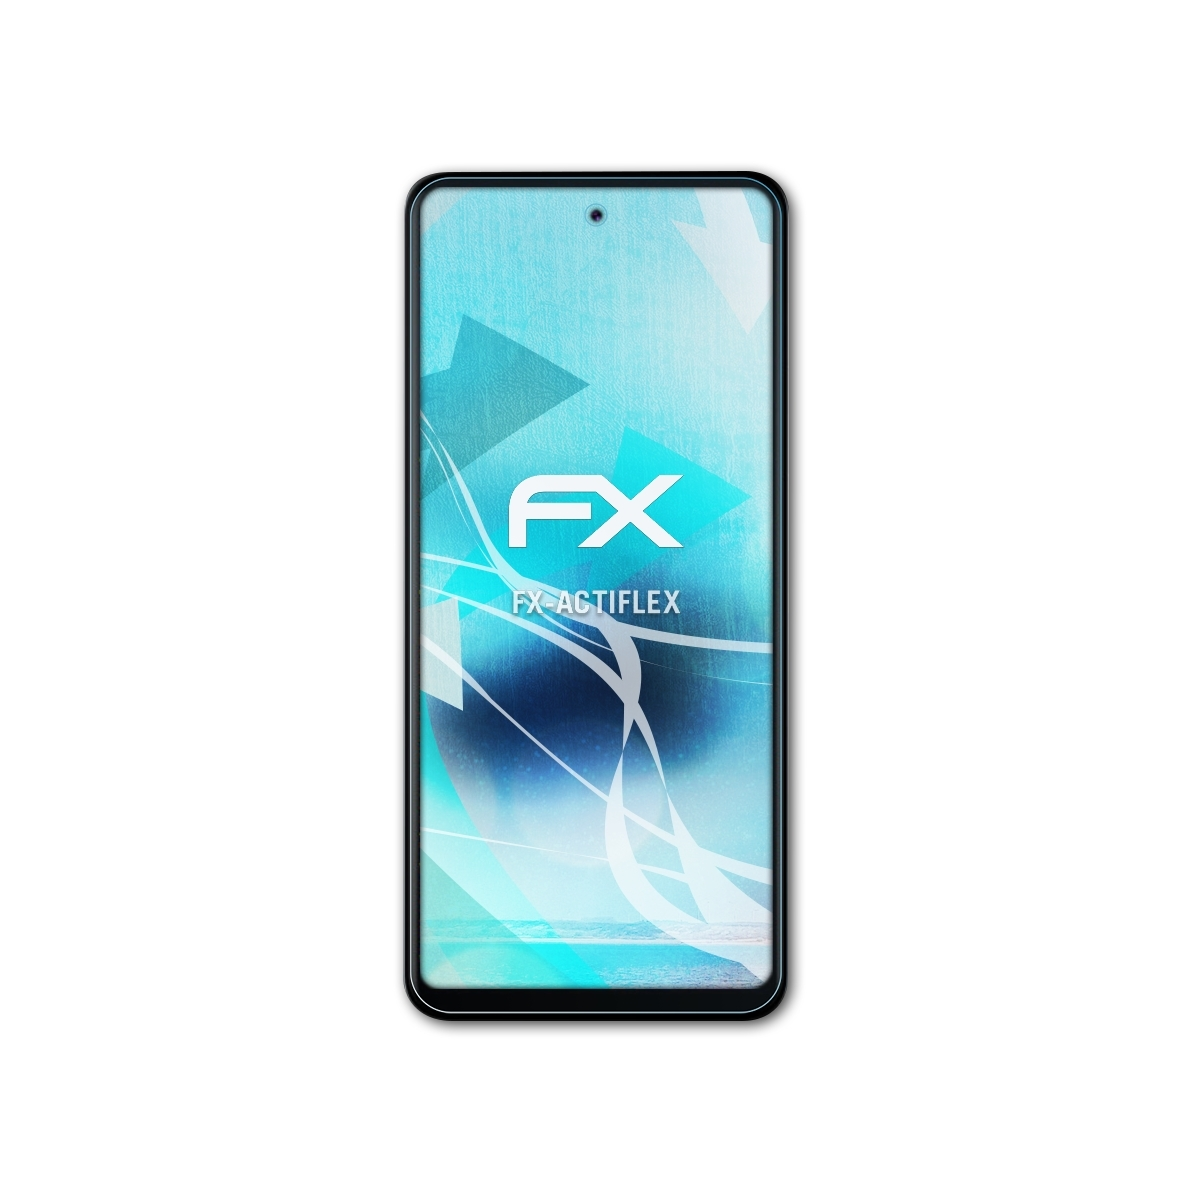 ATFOLIX 3x Nuu FX-ActiFleX Mobile Displayschutz(für B15)